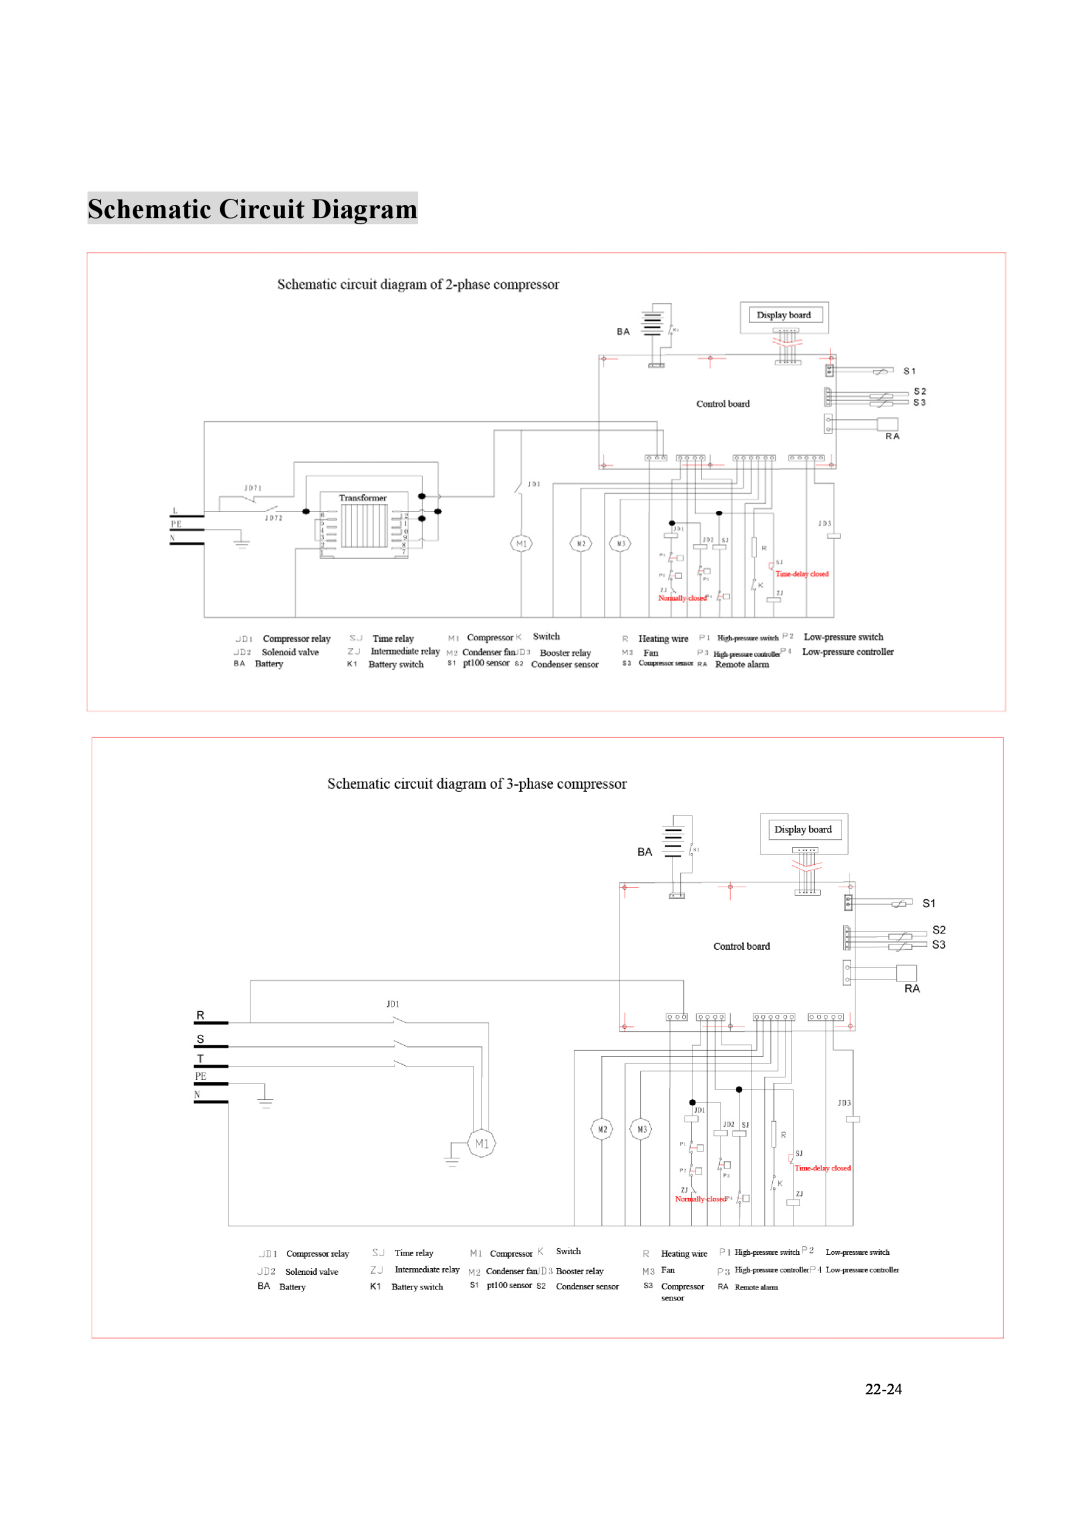 Haier DW-150W200 operation manual Schematic Circuit Diagram, 22-24 